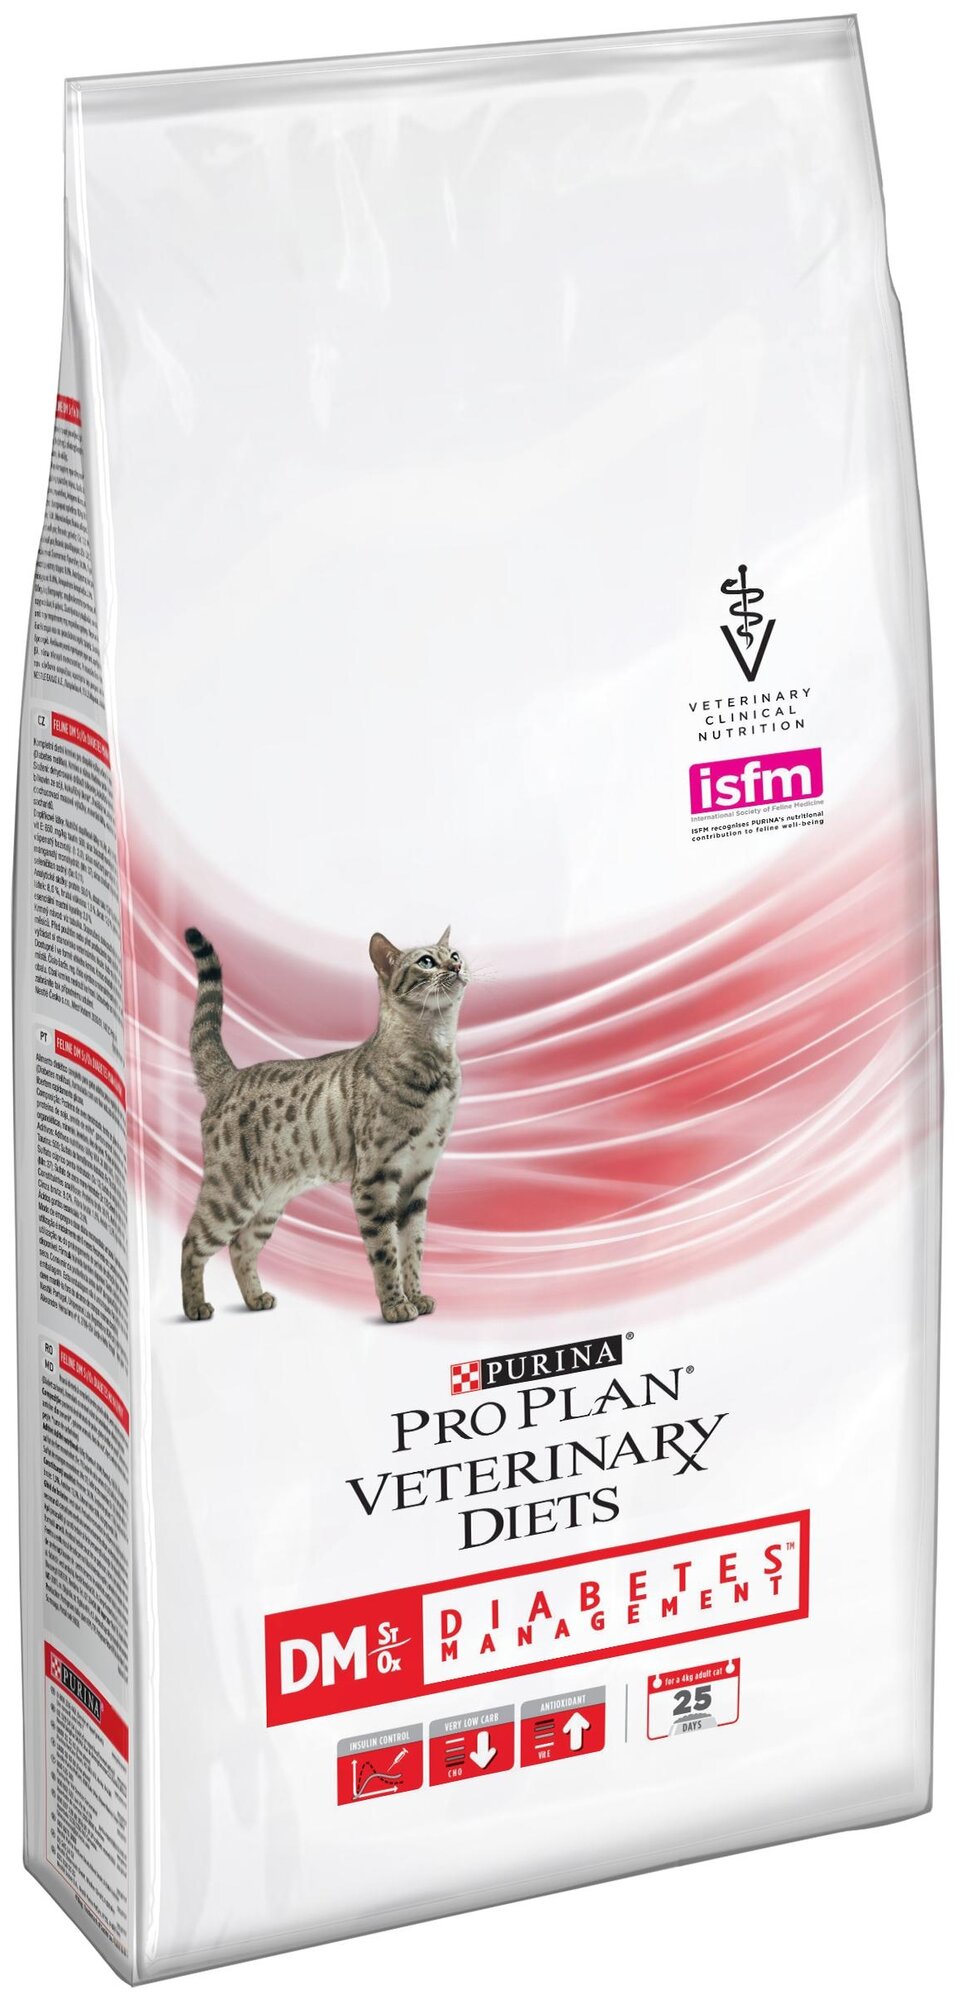 Сухой корм Pro Plan Veterinary diets DM корм для кошек при диабете, Пакет, 1,5 кг - фотография № 9